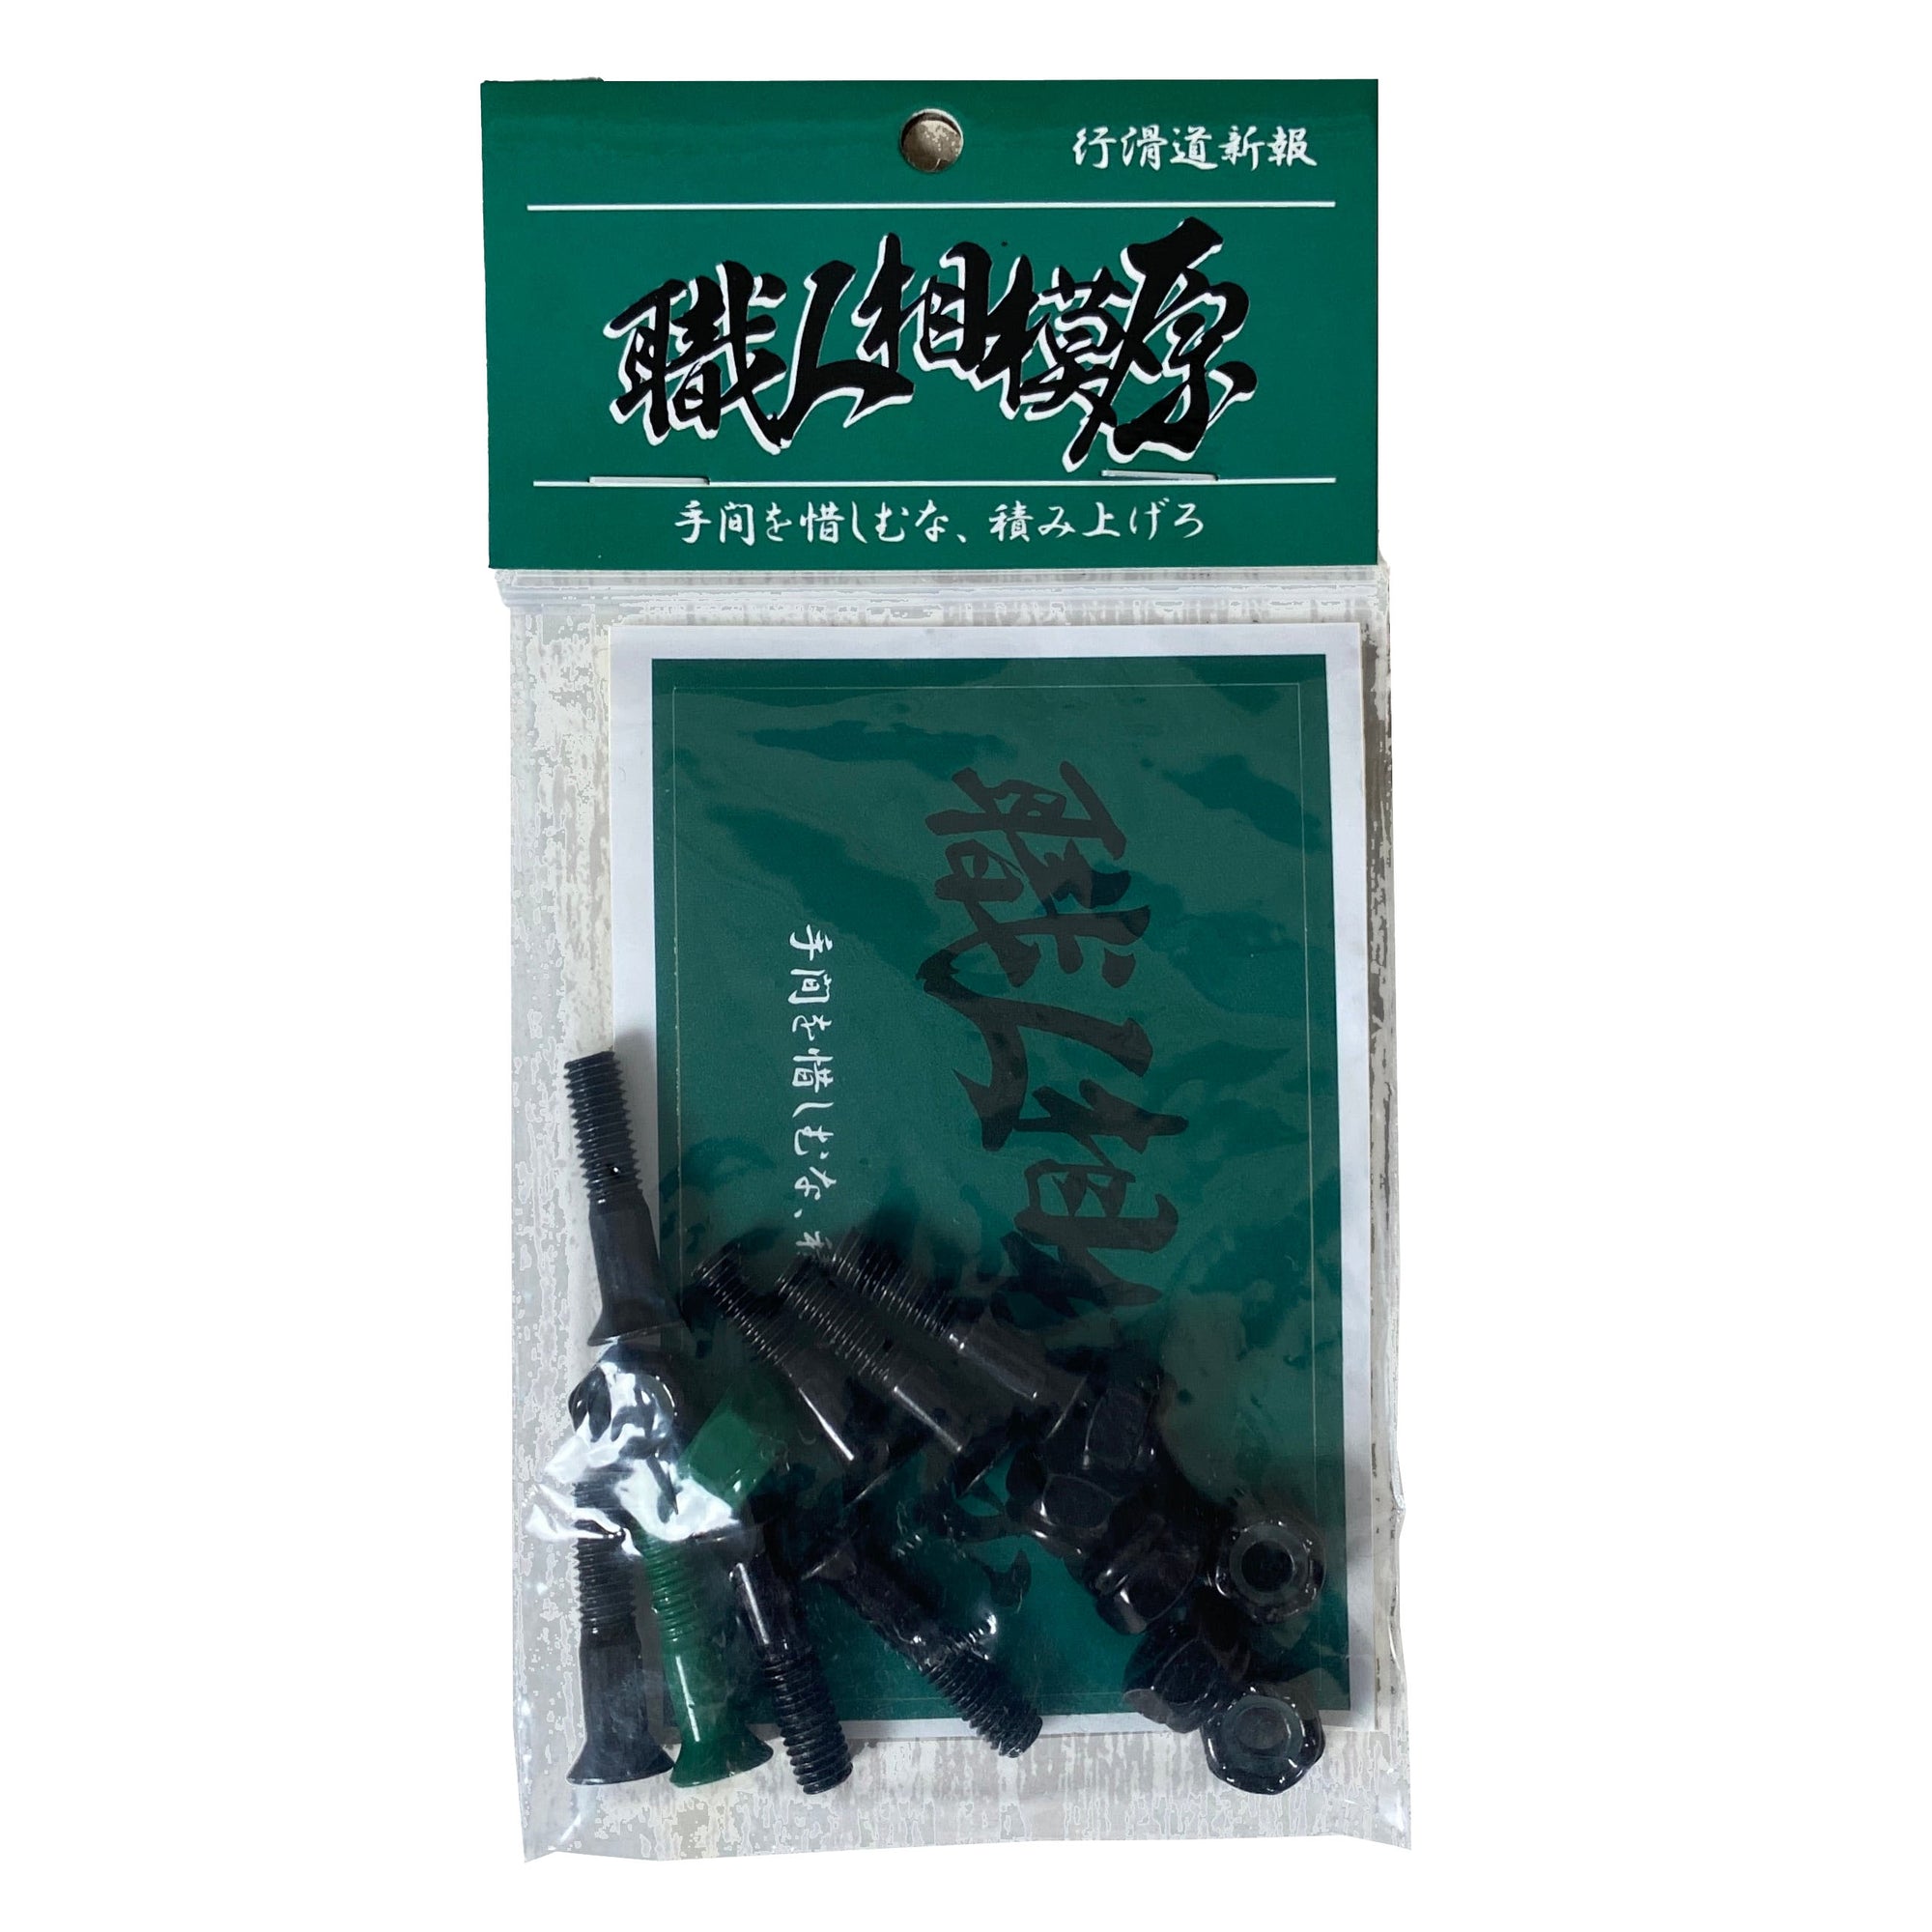 Tatsumax 7/8" Allen Hardware- Black/Green